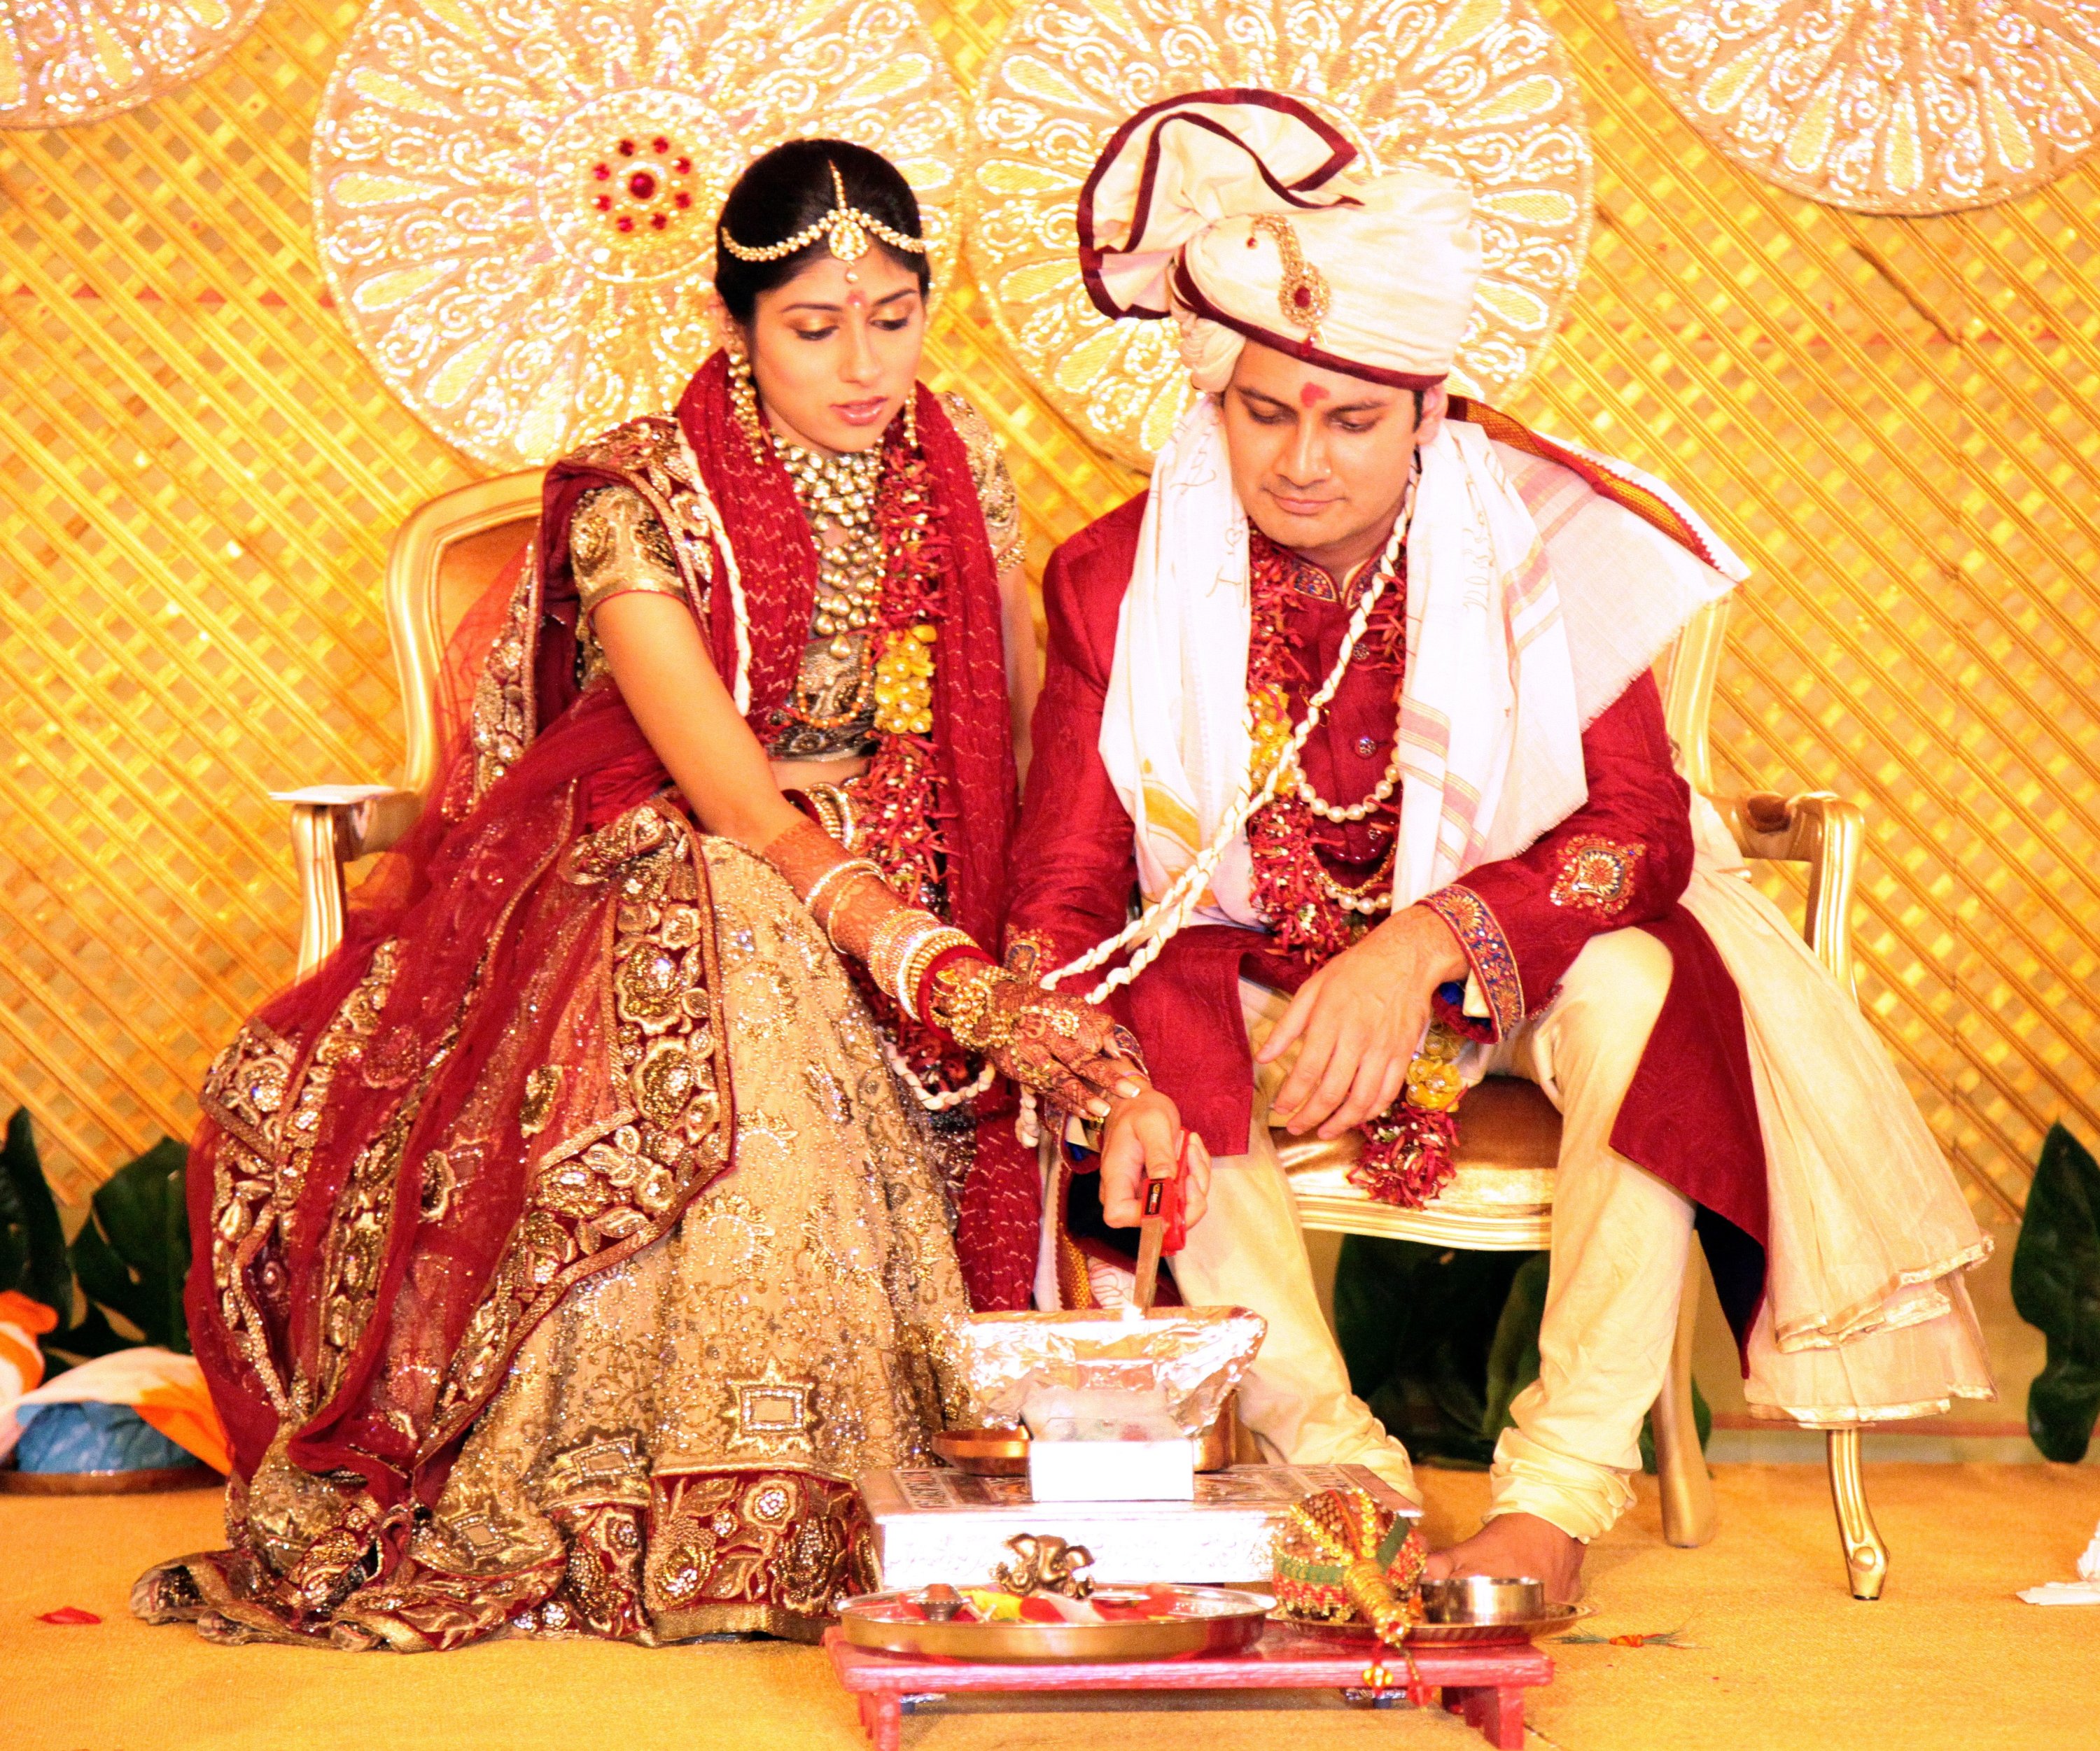 Pedagang berlian India Sahil Kothari (kanan) dan Janavi Javeri berpose selama pernikahan mereka di 5 Star Maxx Royal Hotel di Antalya, Turki selatan, 2012. (Sabah File Photo) 